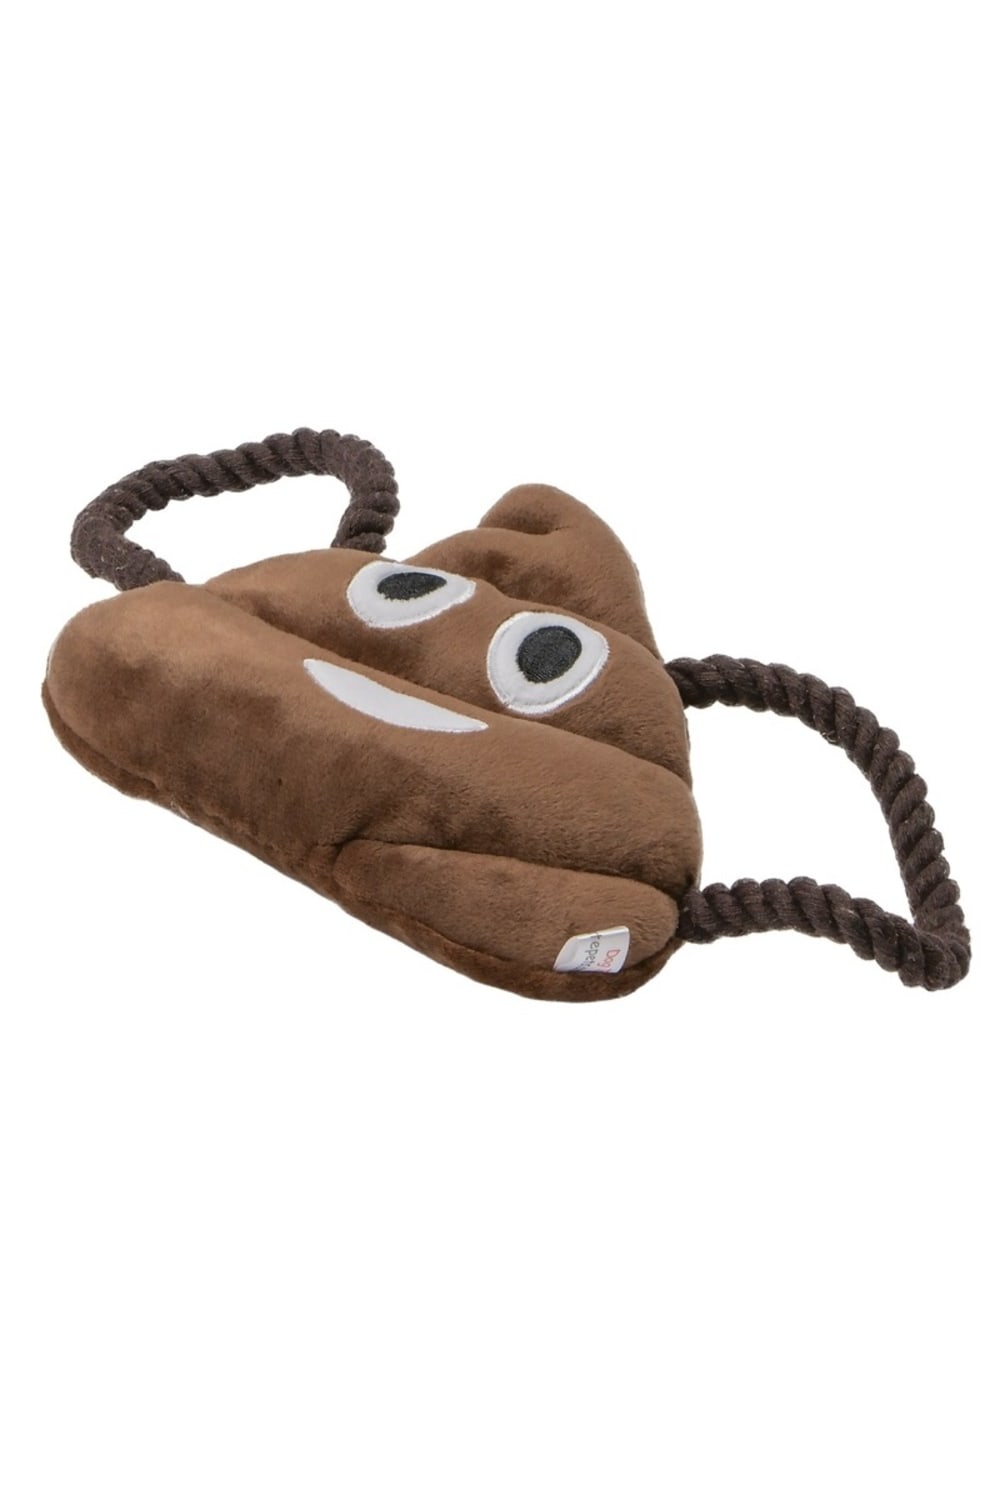 Animate Poo Emoji Plush Dog Toy (Brown) (One Size)